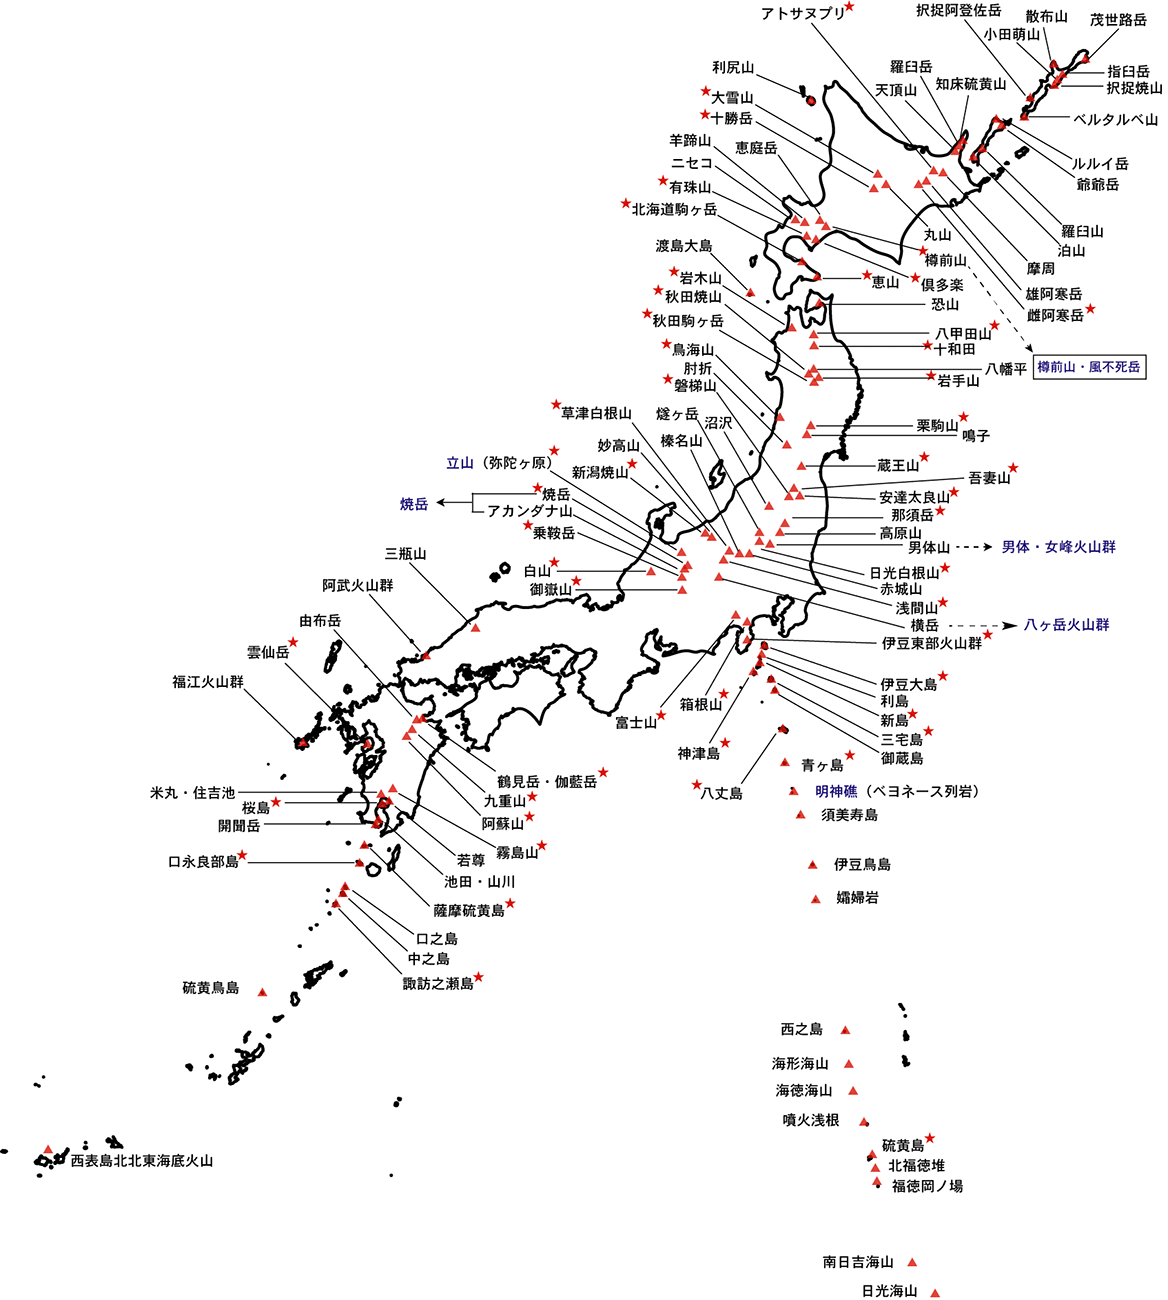 active volcano map